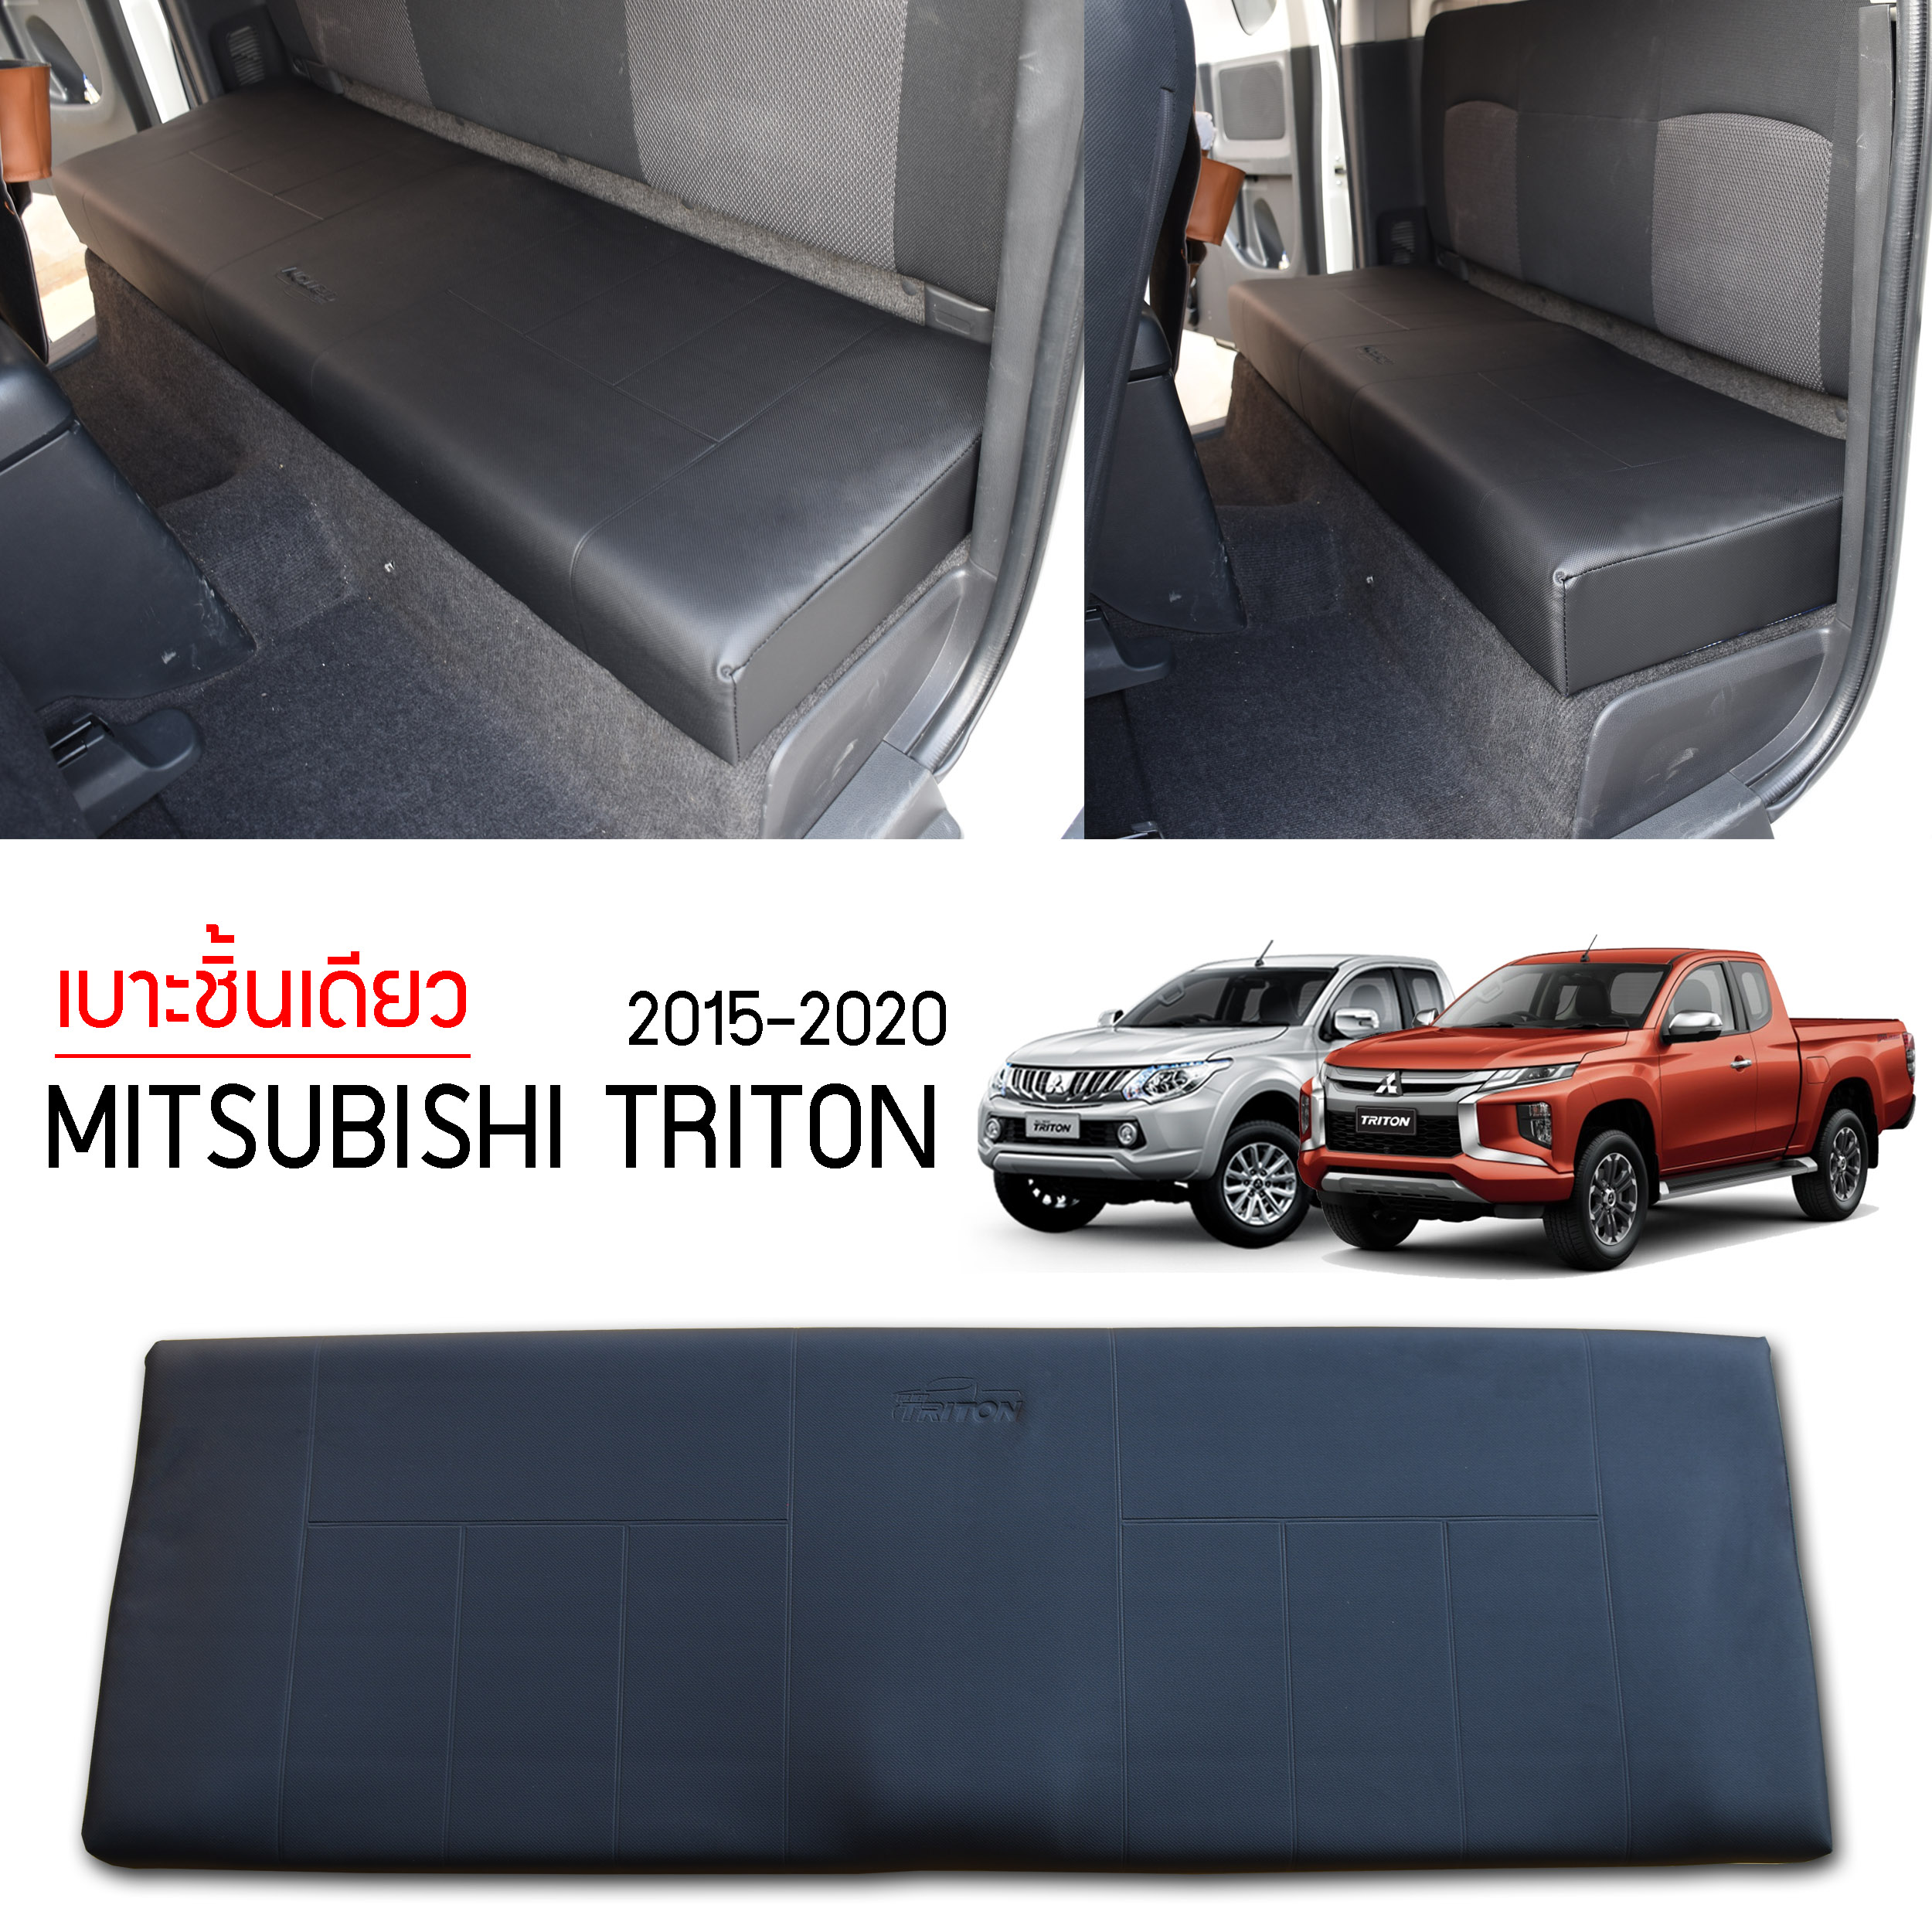 Smart Cab Seat for Mitsubishi Triton 2015-2020